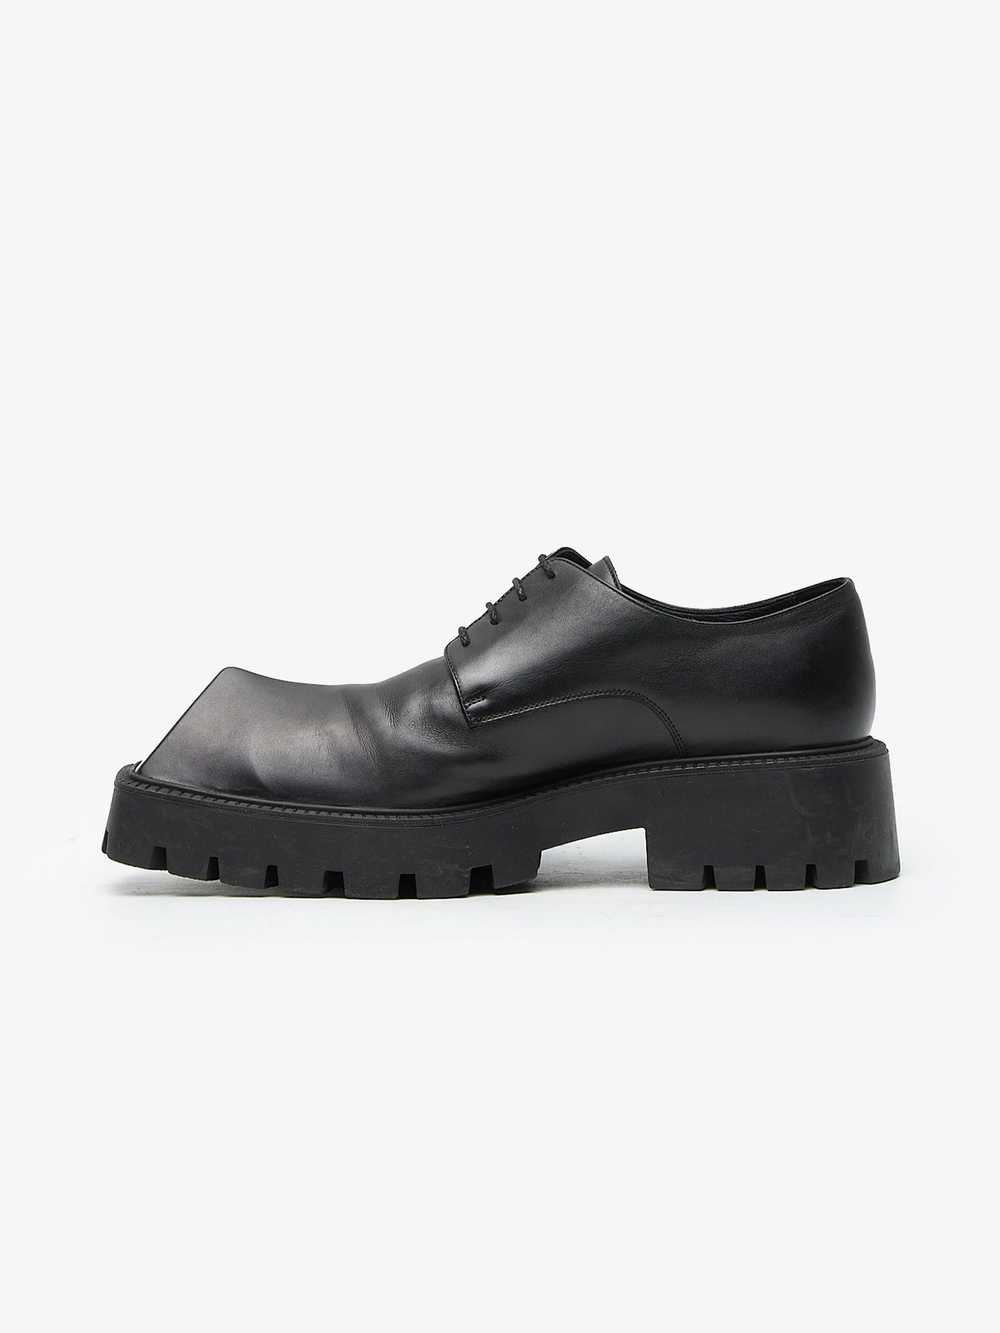 Balenciaga Black Rhino Leather Derby Shoes - image 3